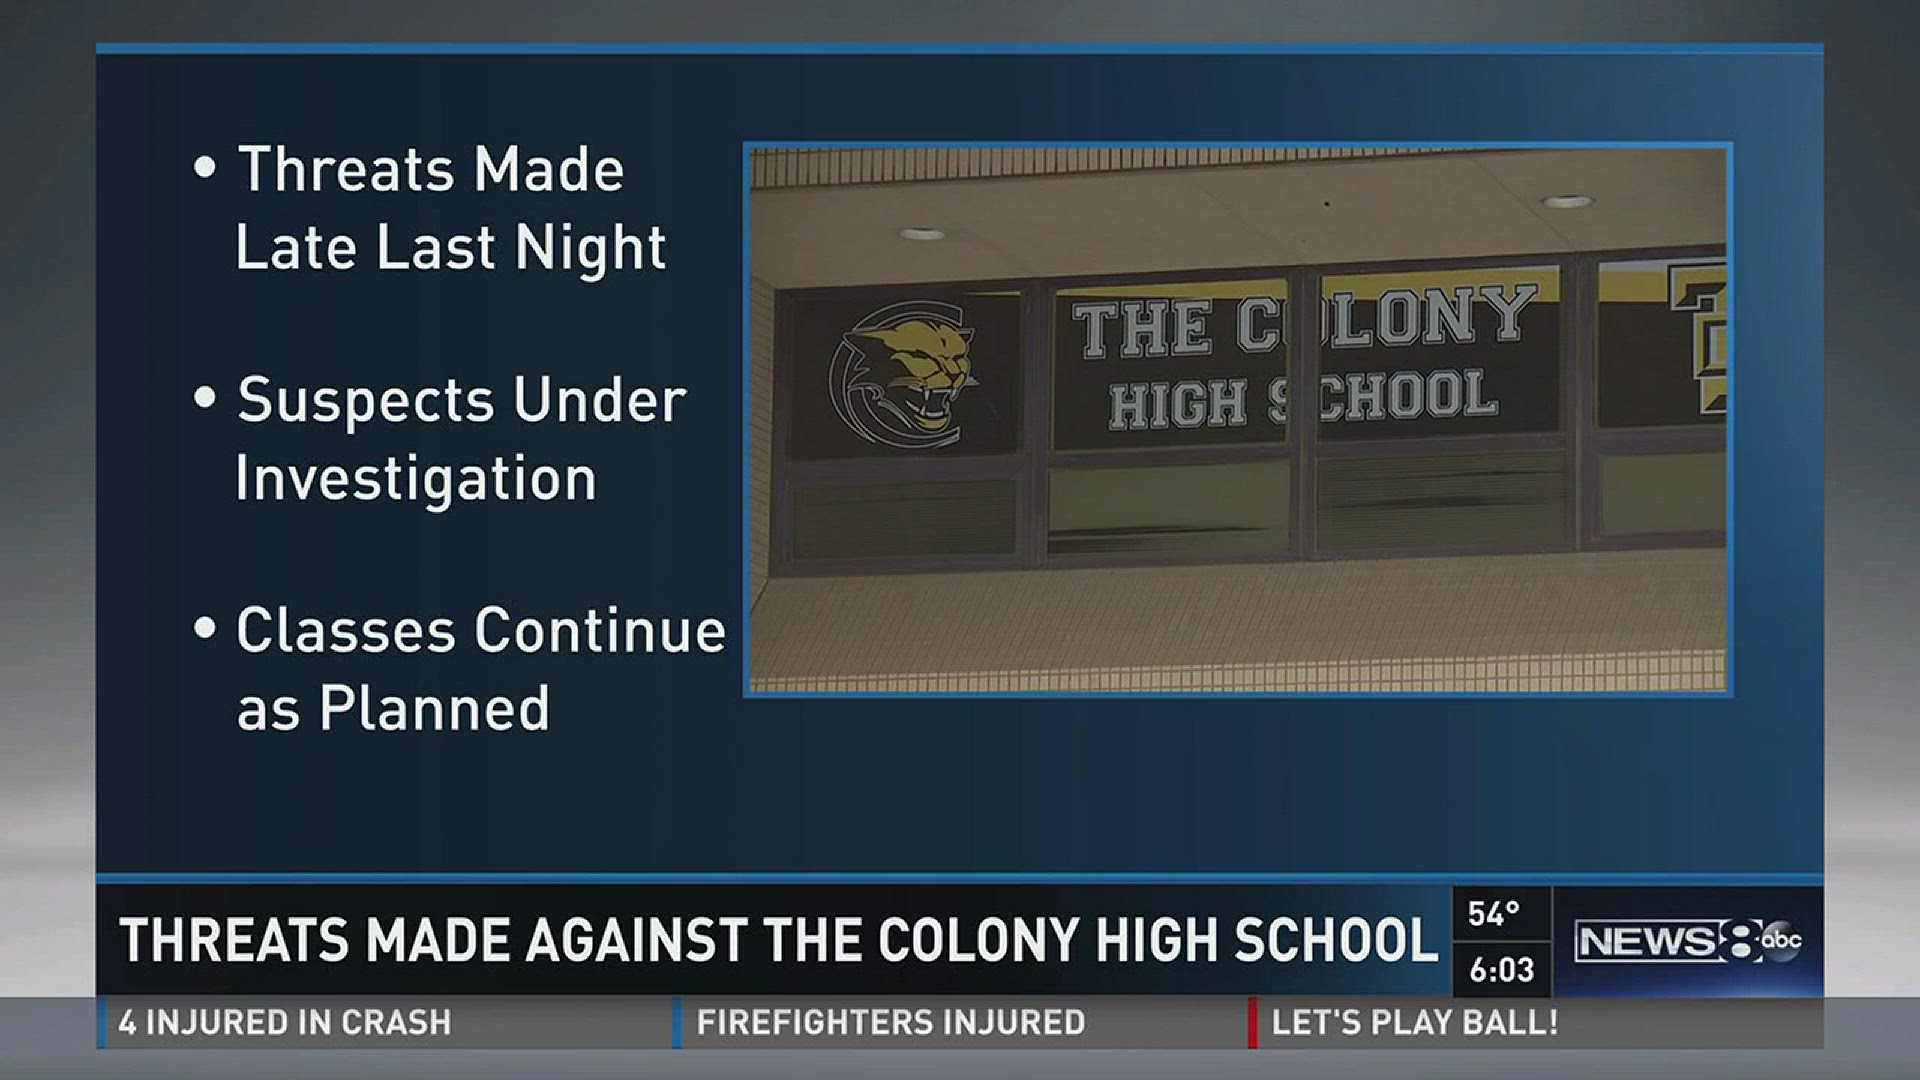 Threats made against The Colony High School